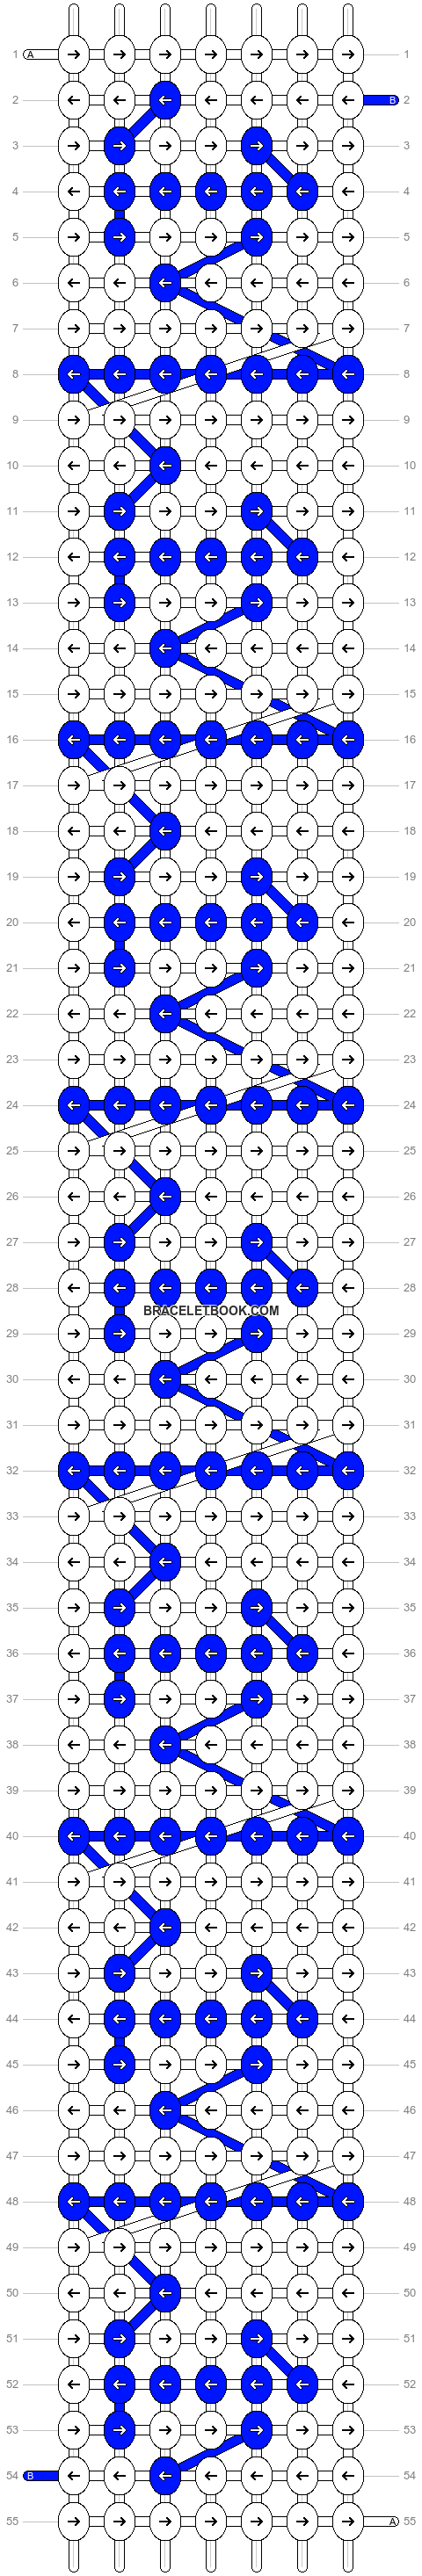 Alpha pattern #8102 pattern